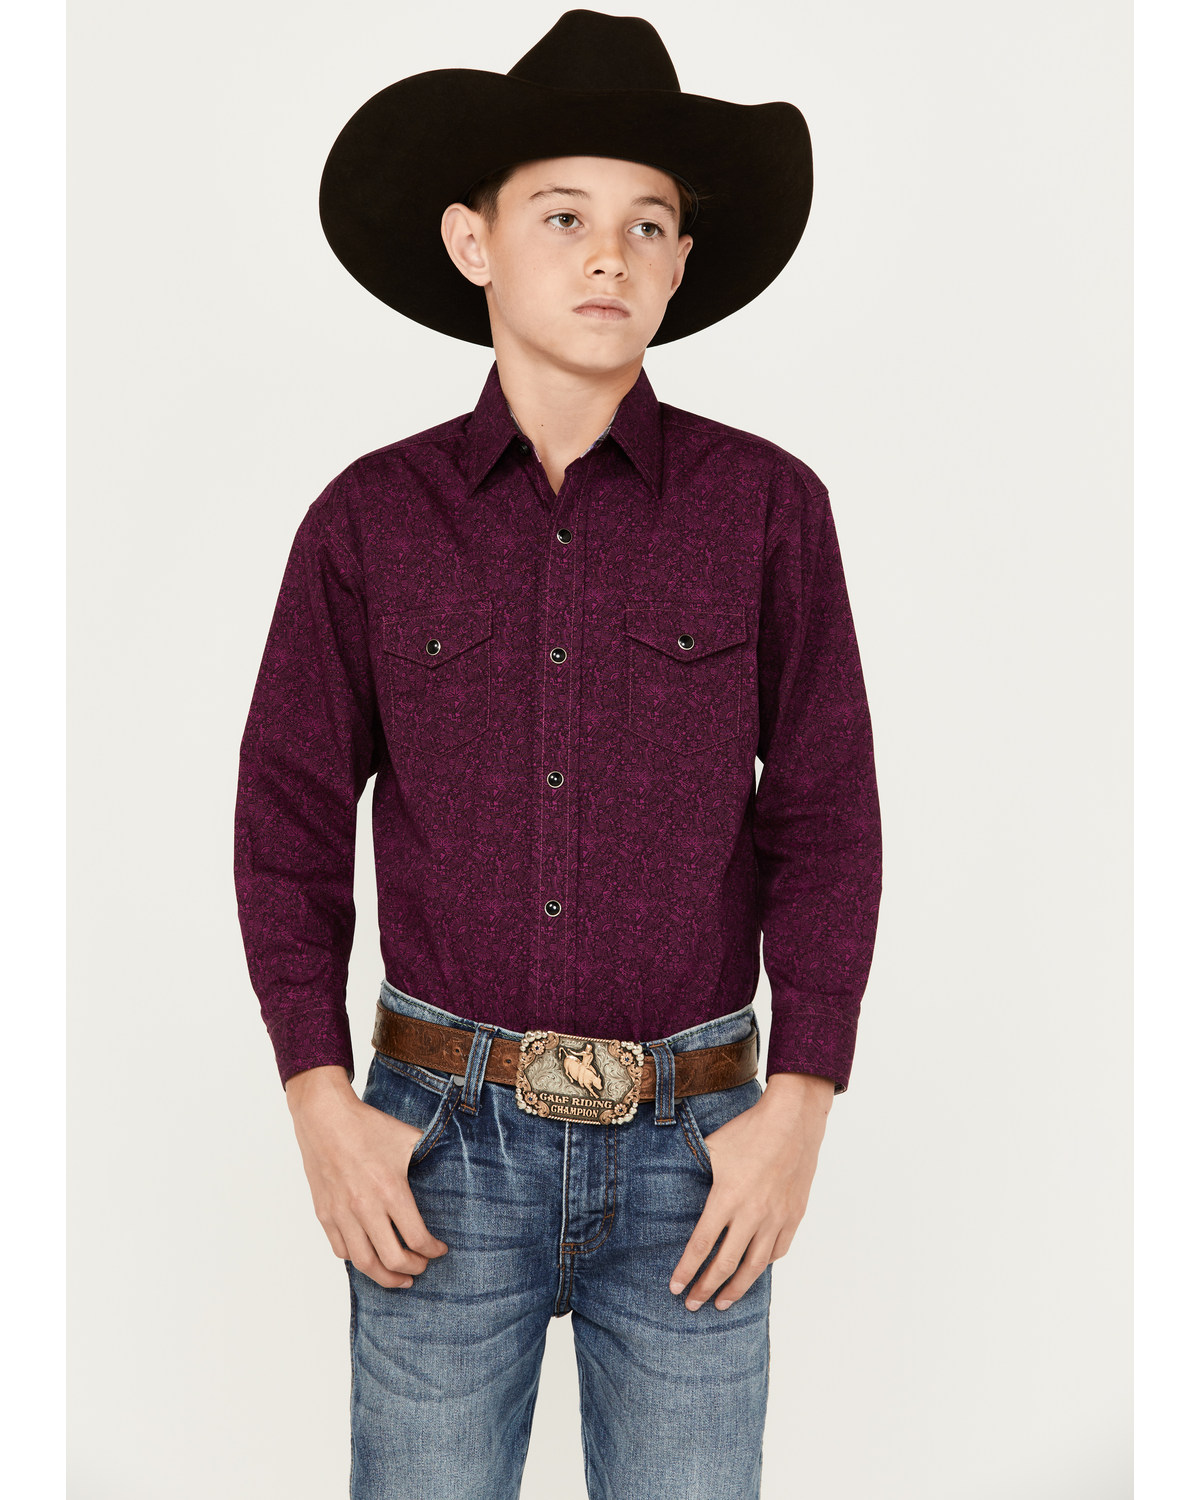 Panhandle Boys' Geo Print Long Sleeve Snap Western Shirt